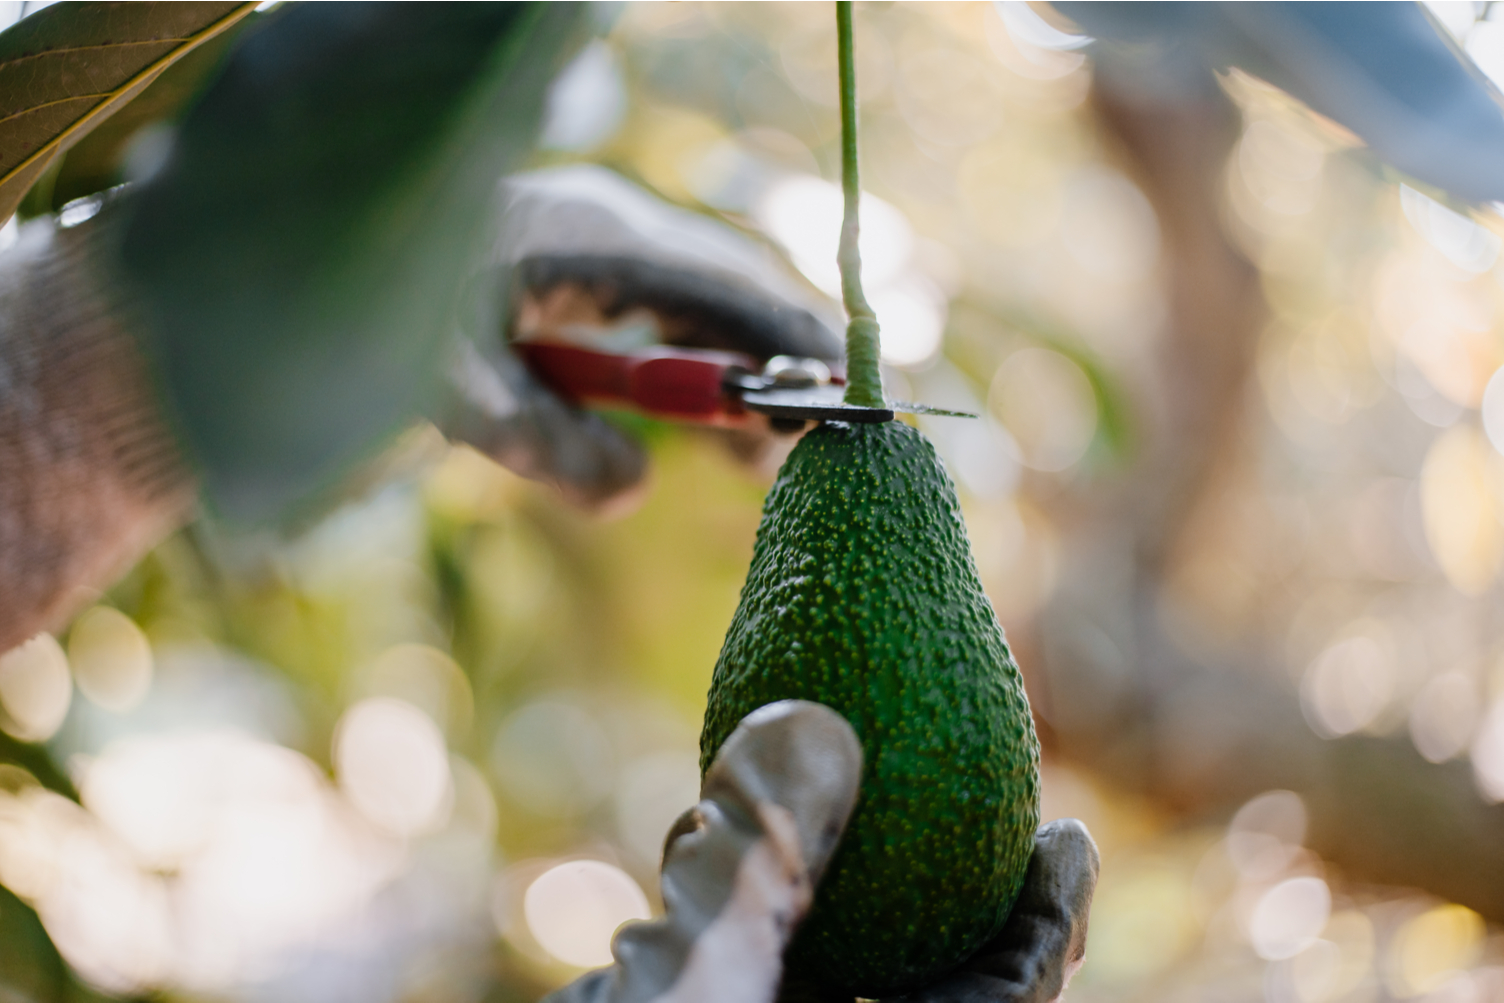 Harvesting avocado